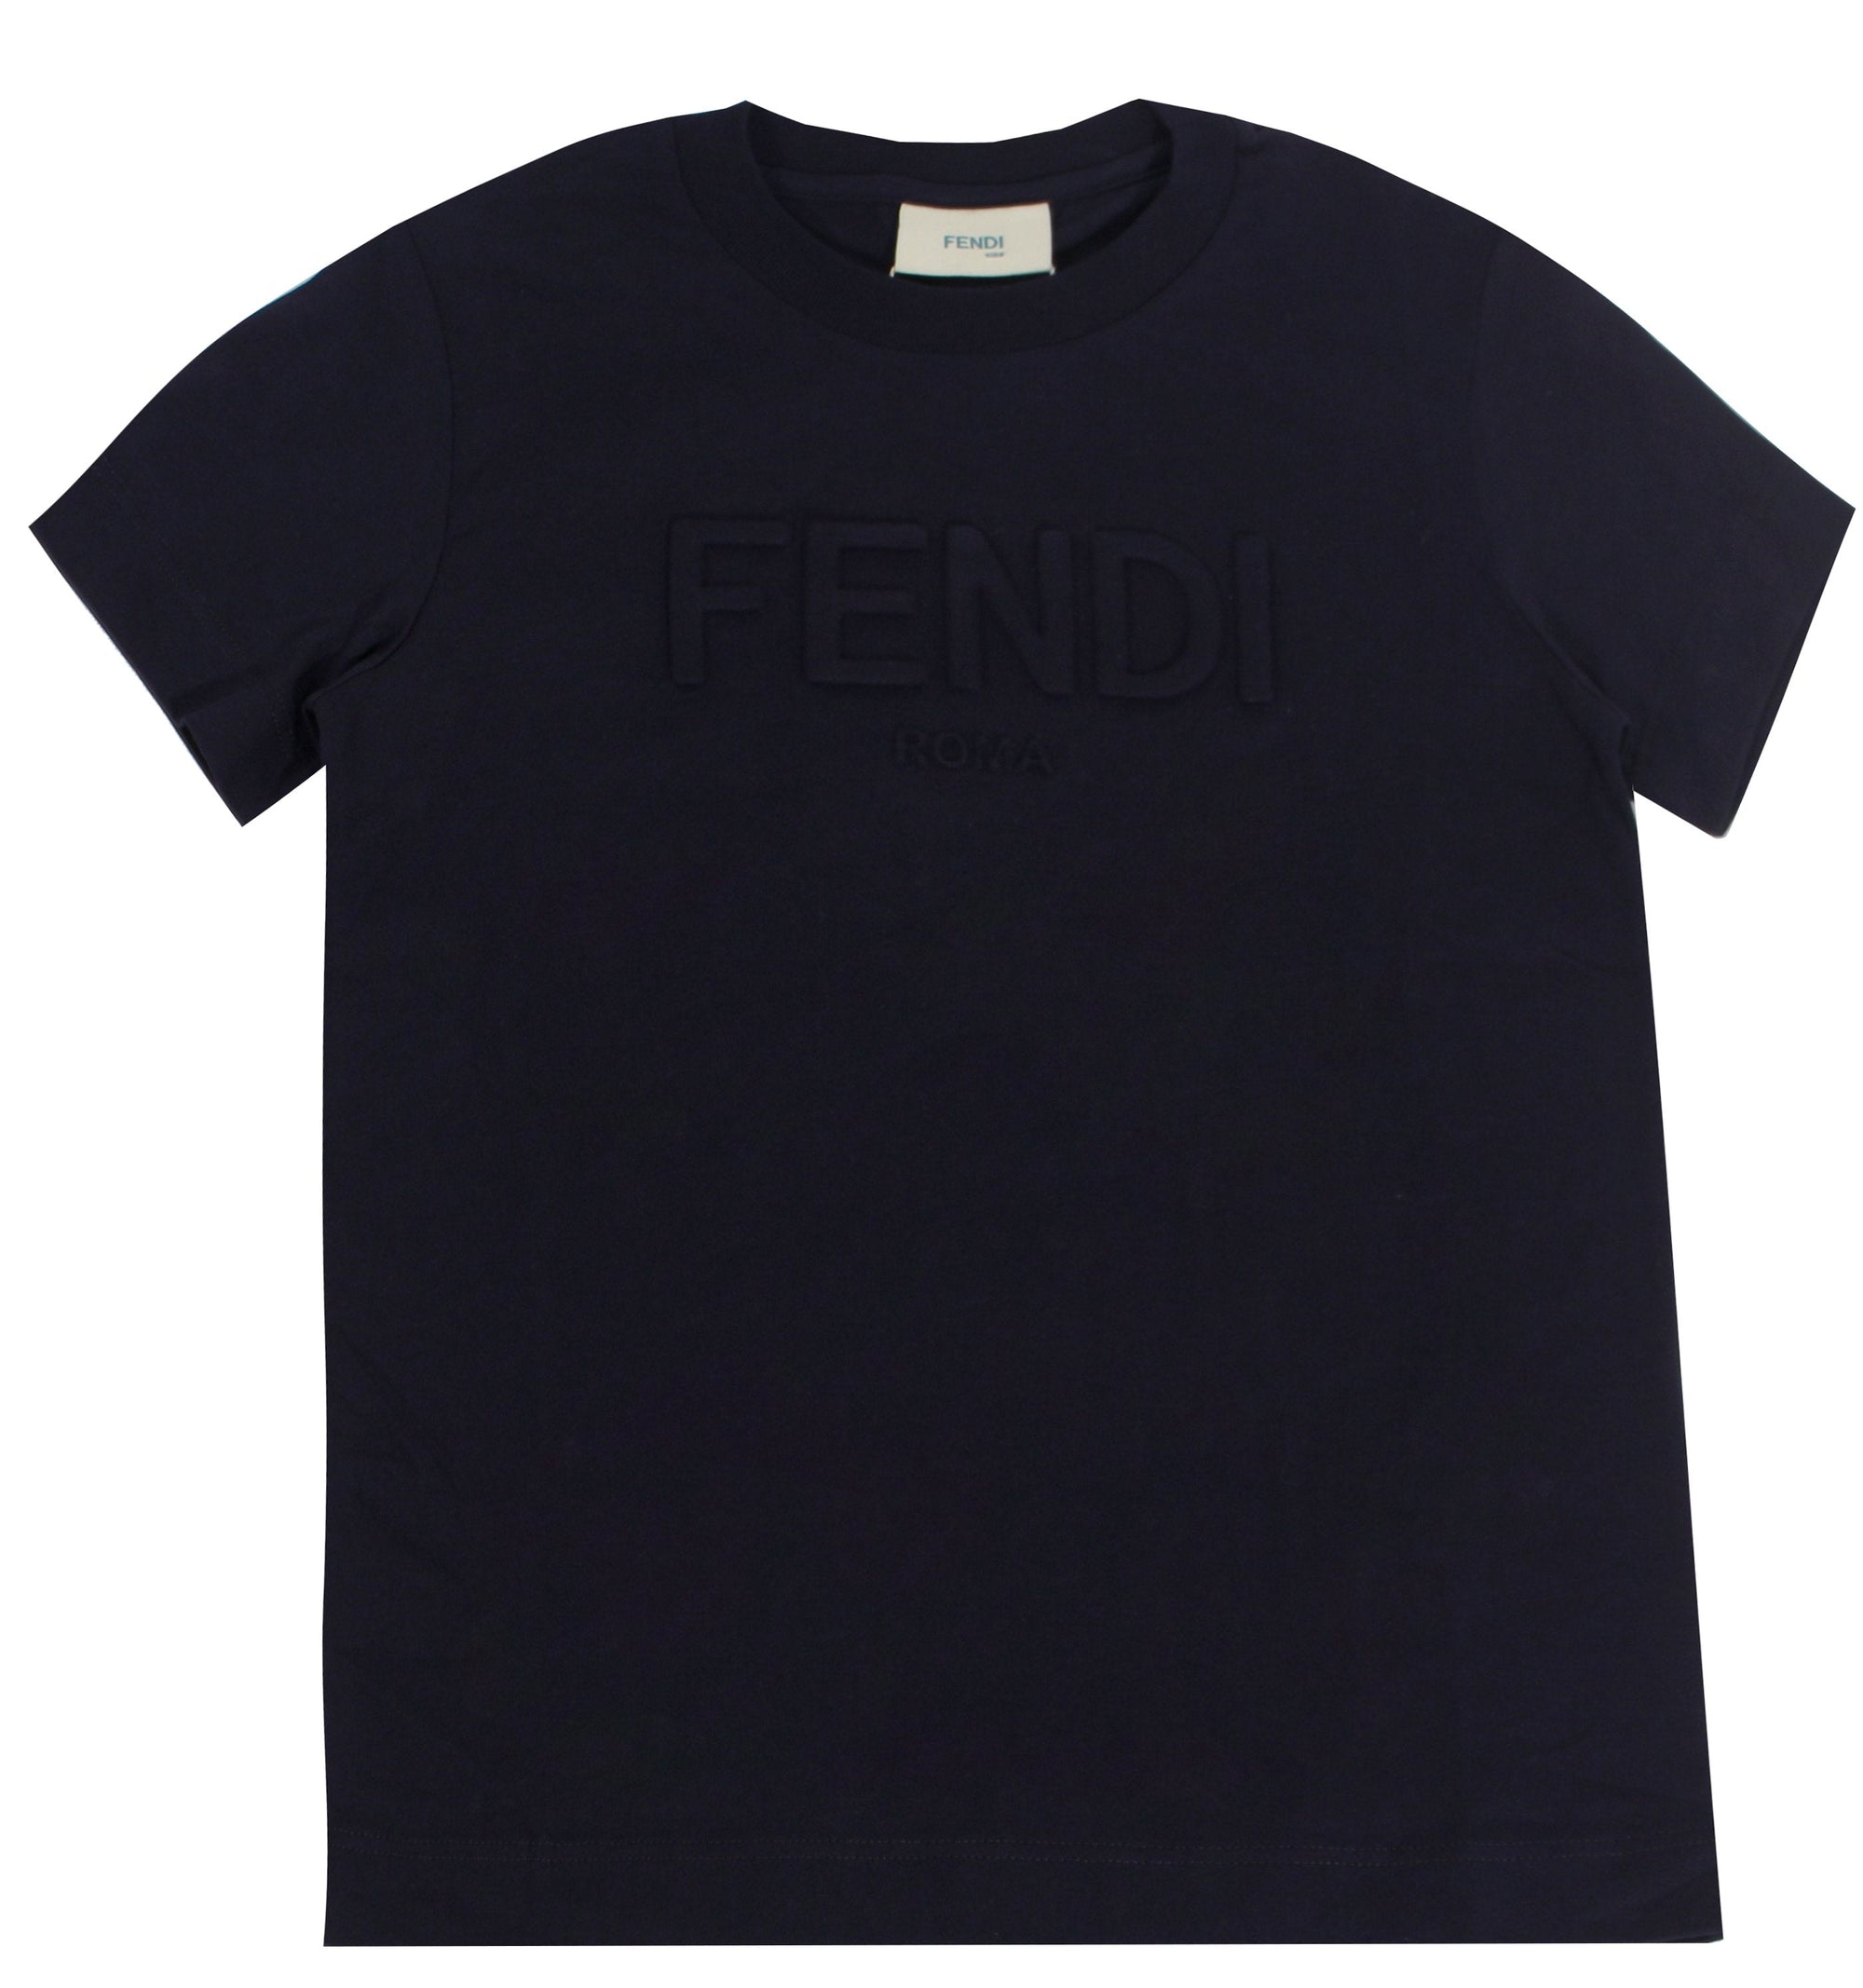 Kids Short Sleeve Tee with Fendi Text Logo - Navy